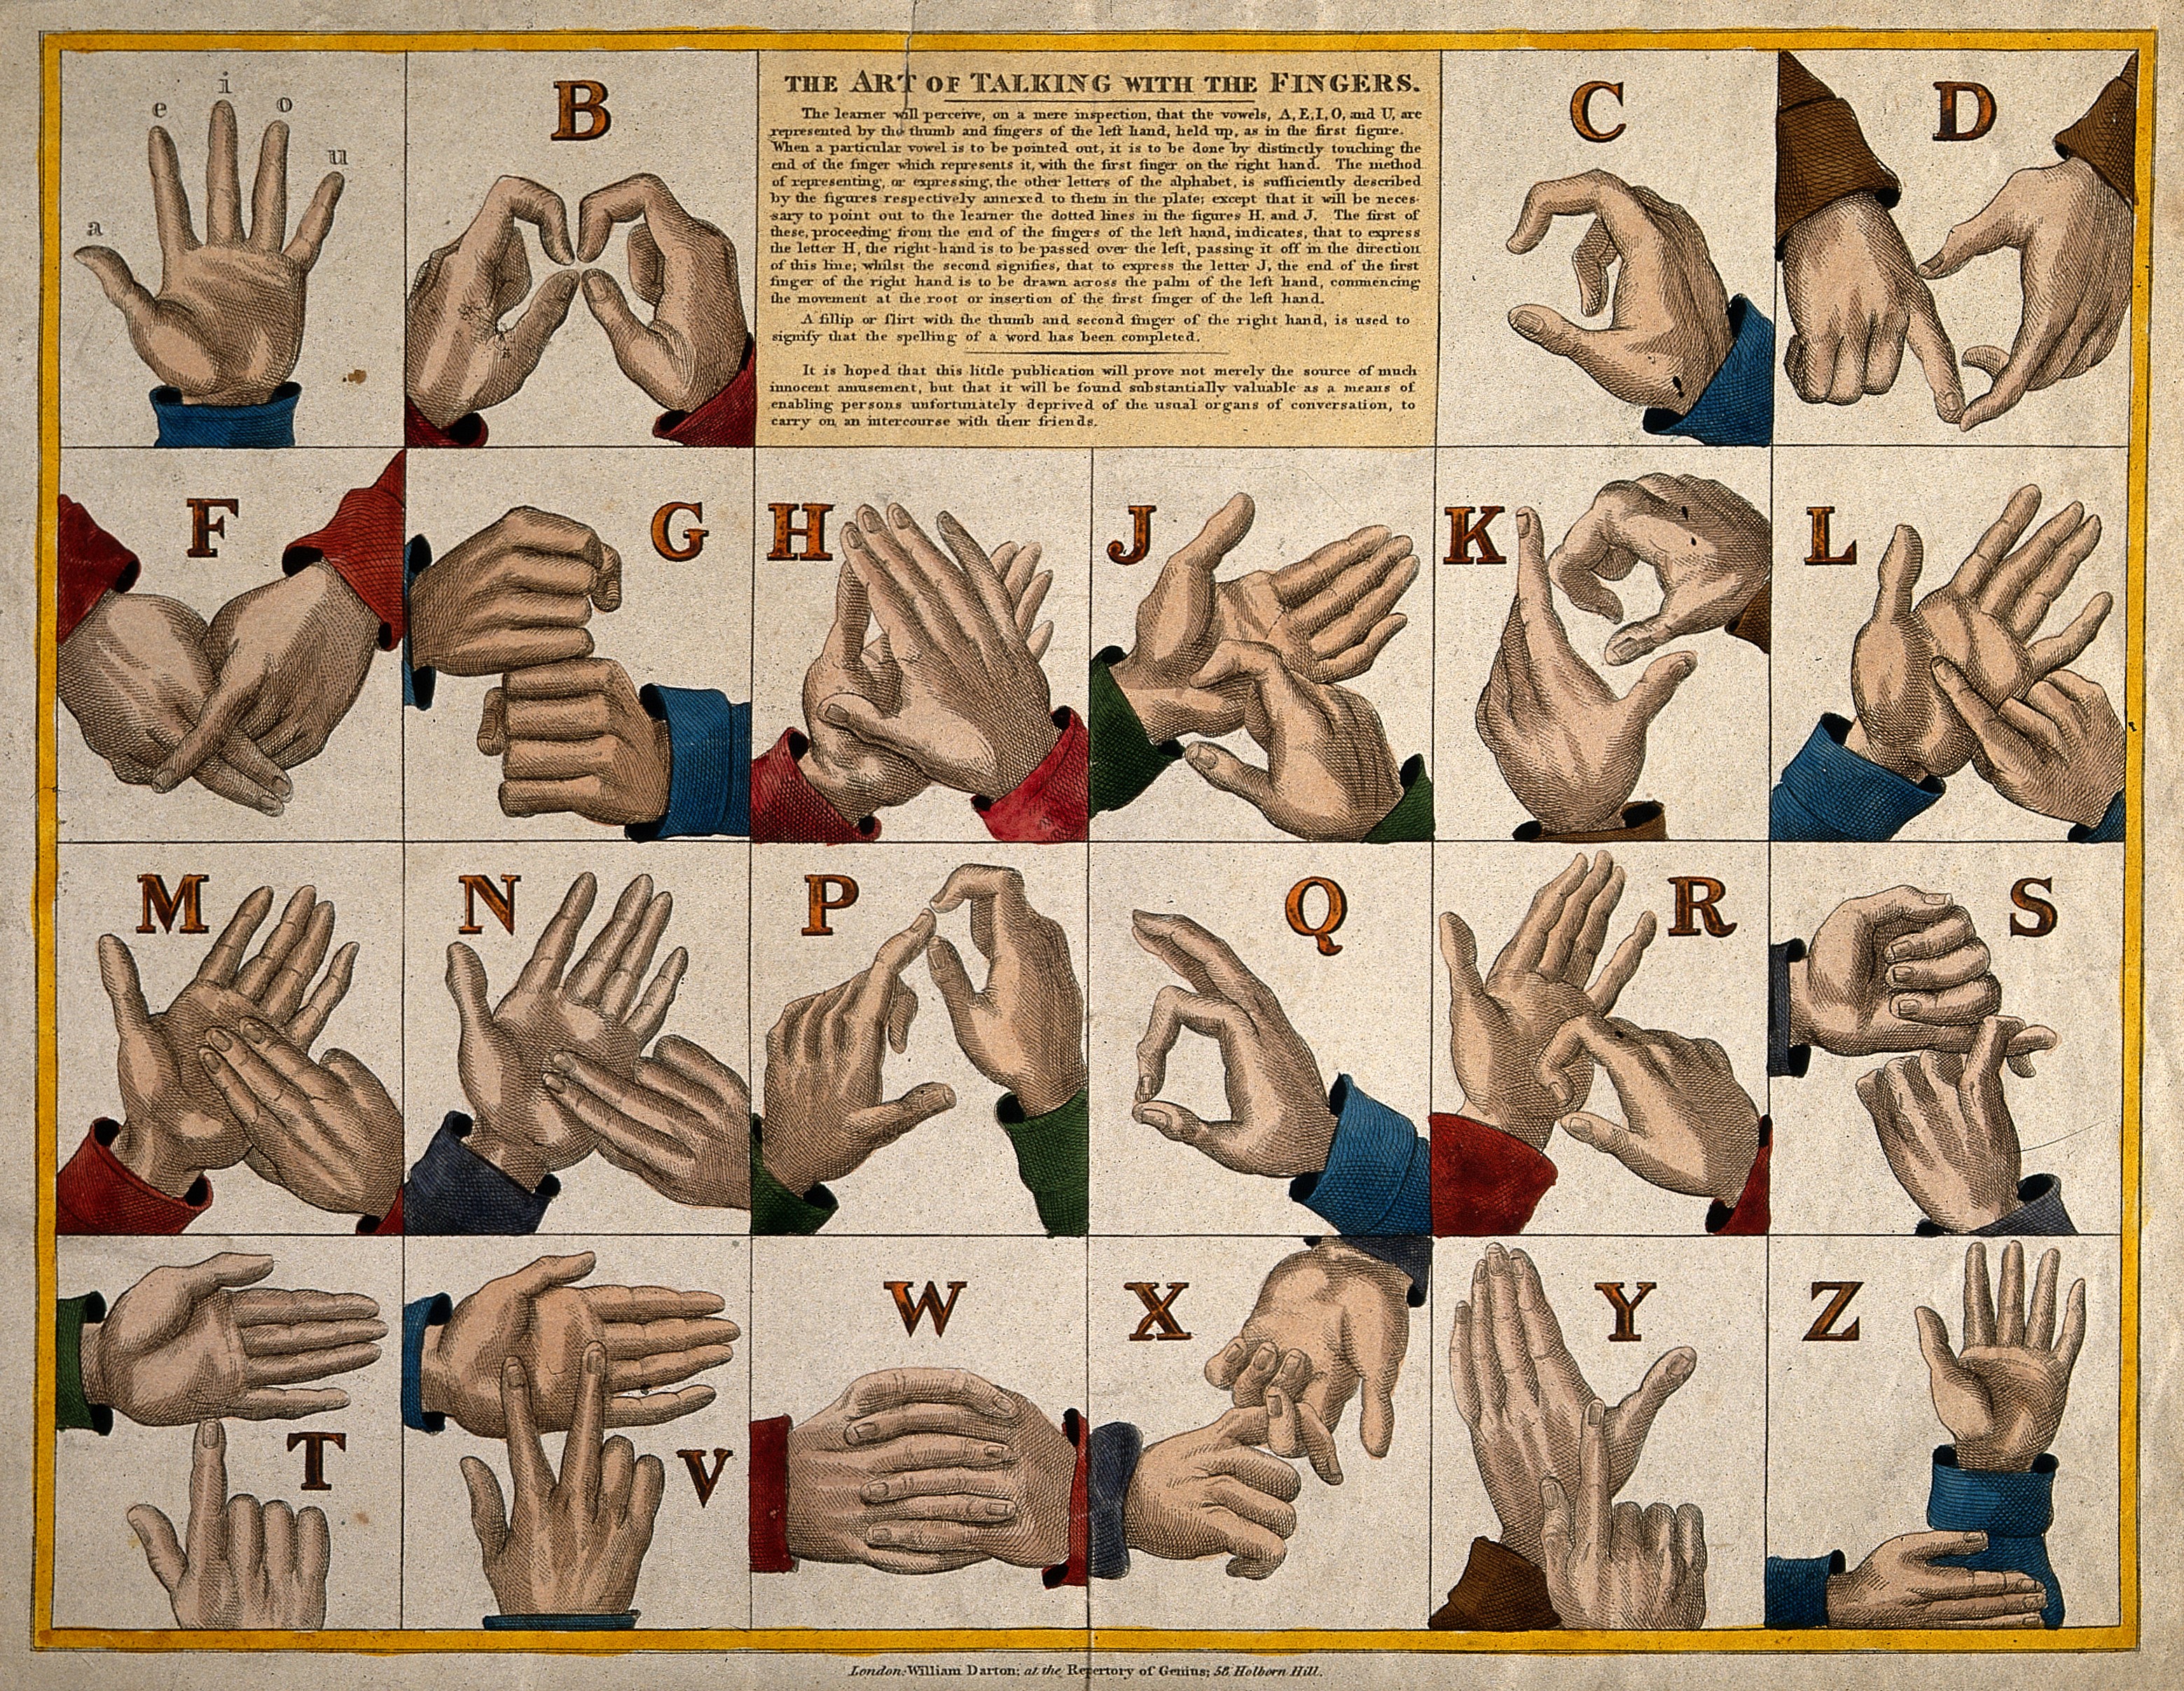 Left Handed Signing - British Sign Language